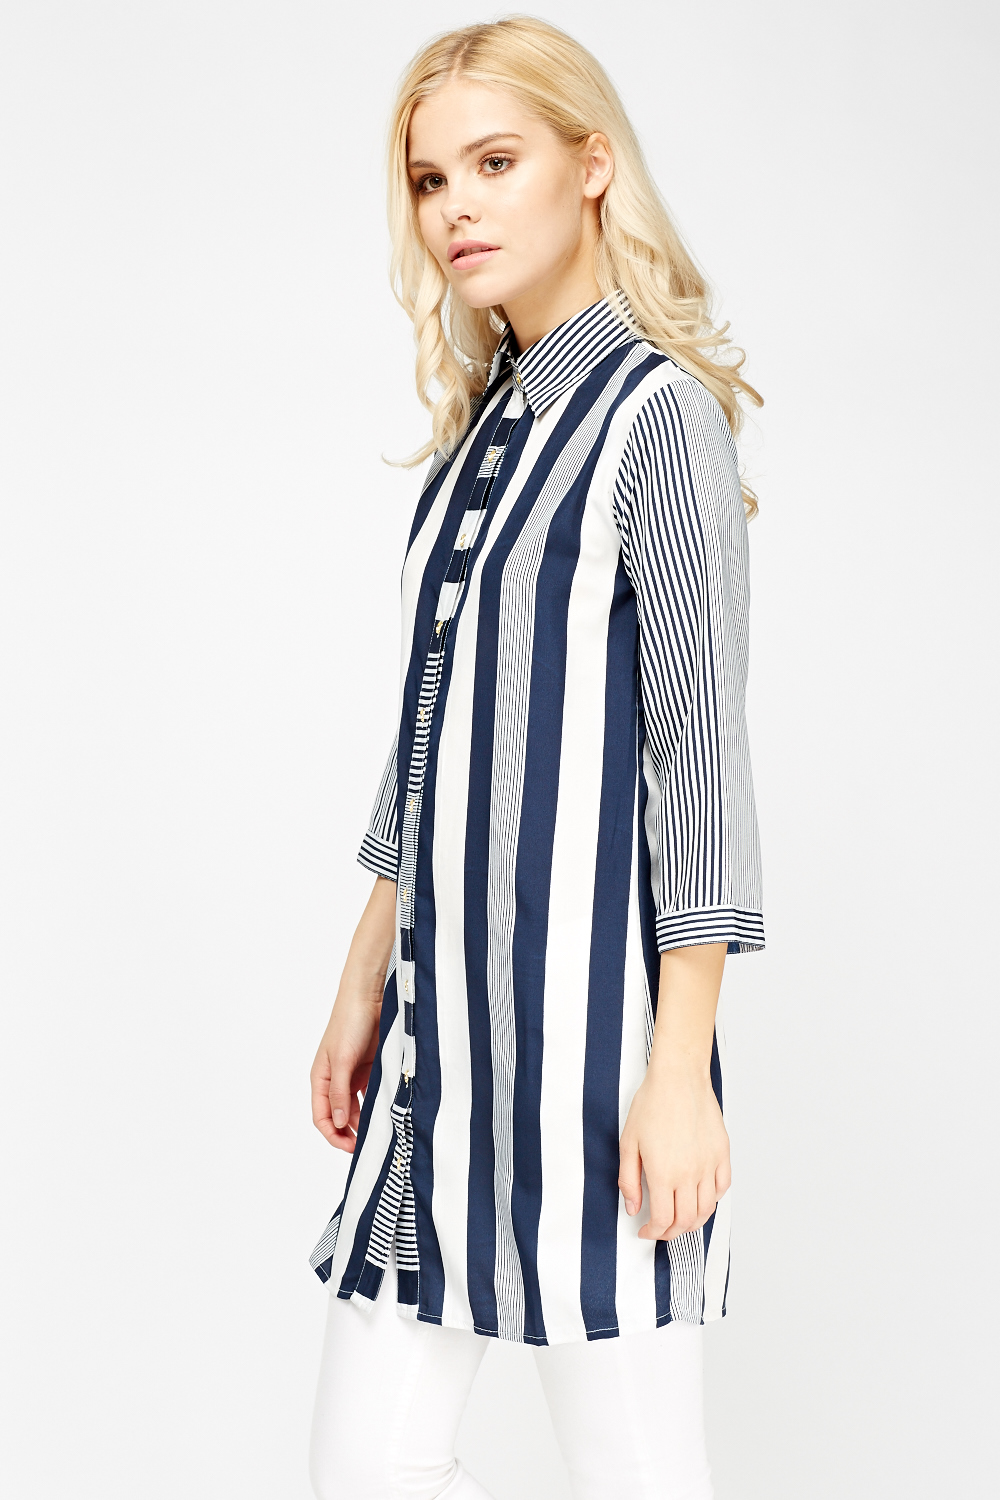 Mixed Striped Long Shirt - Just $6